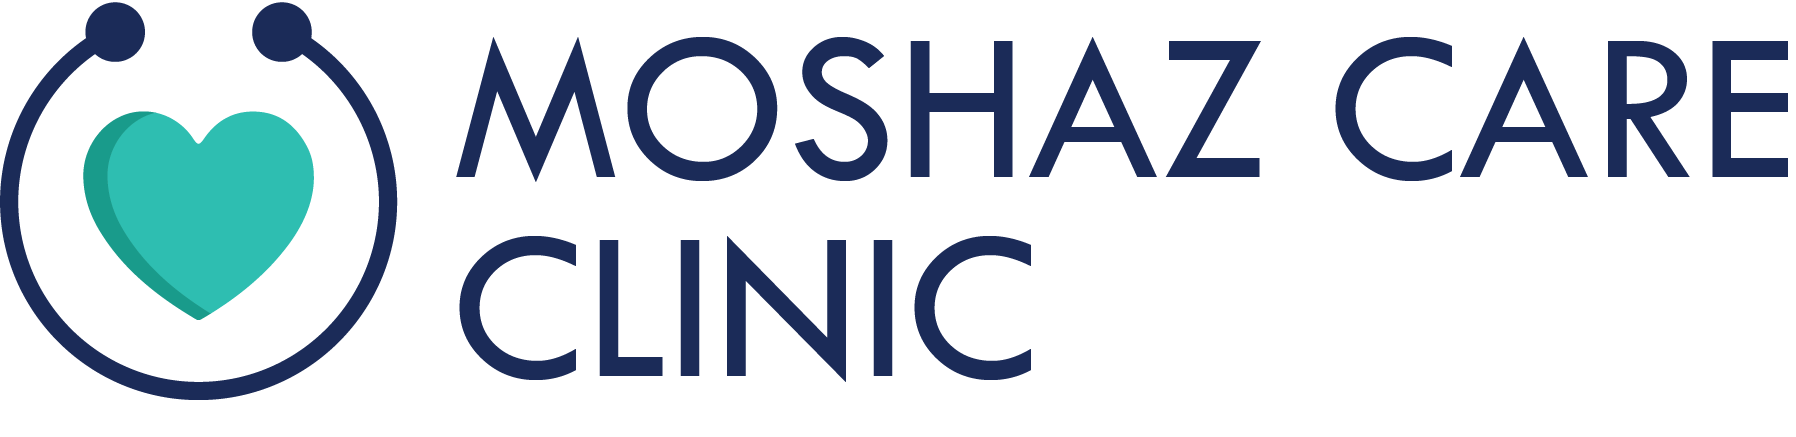 Moshaz Care Clinic